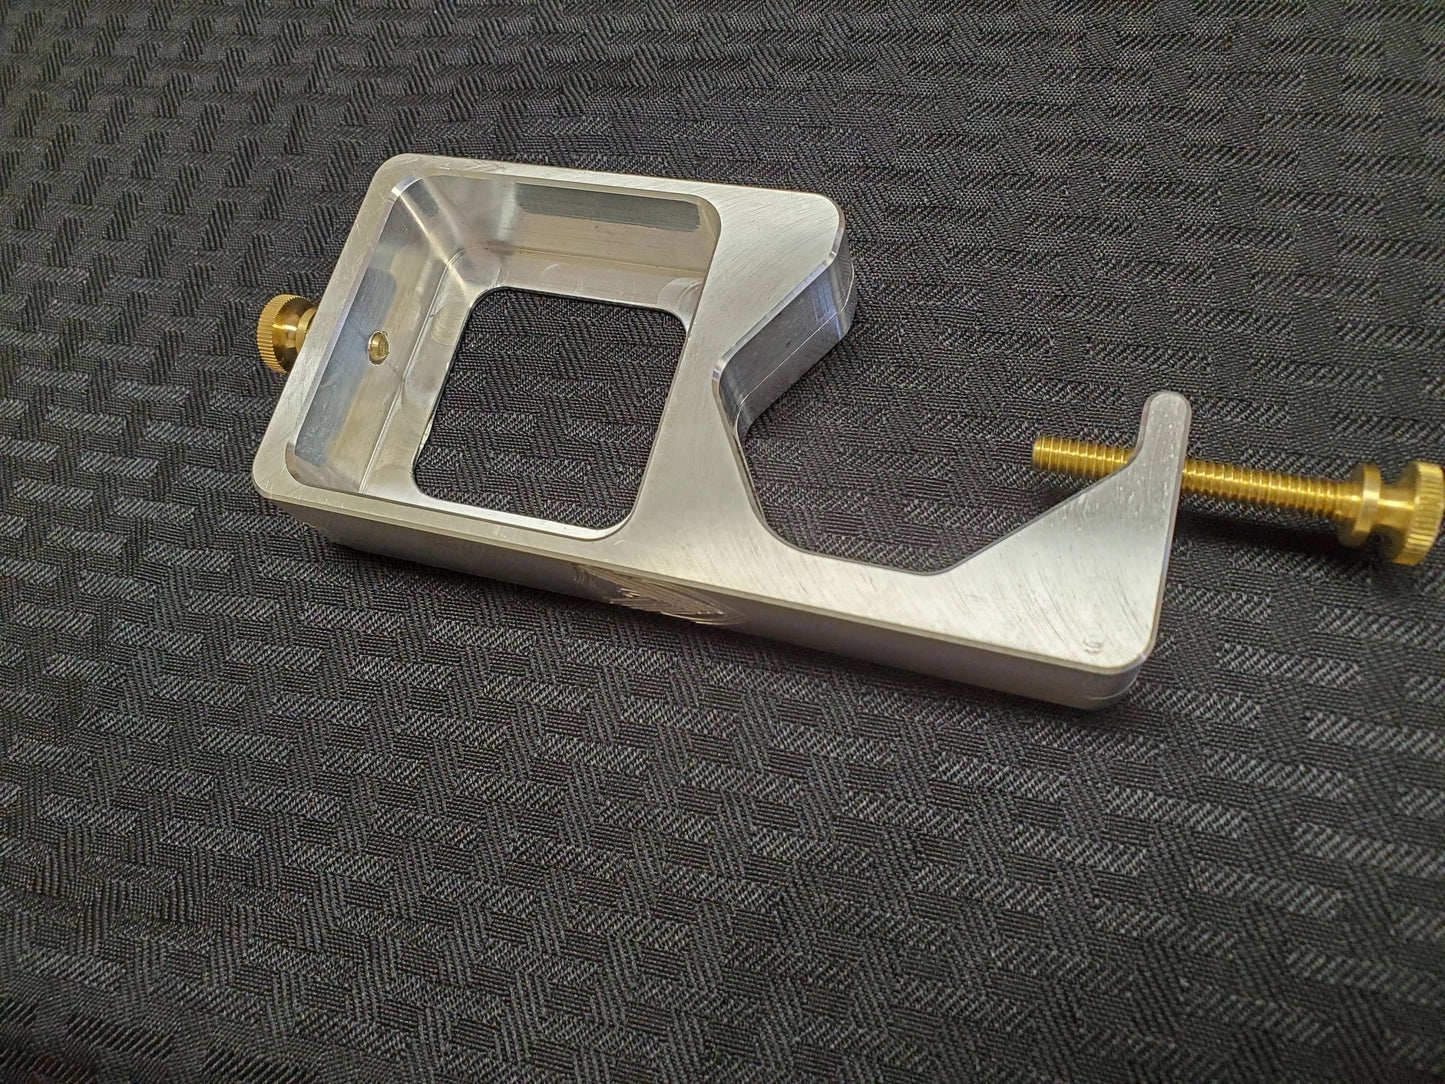 Digital angle finder tube clamp